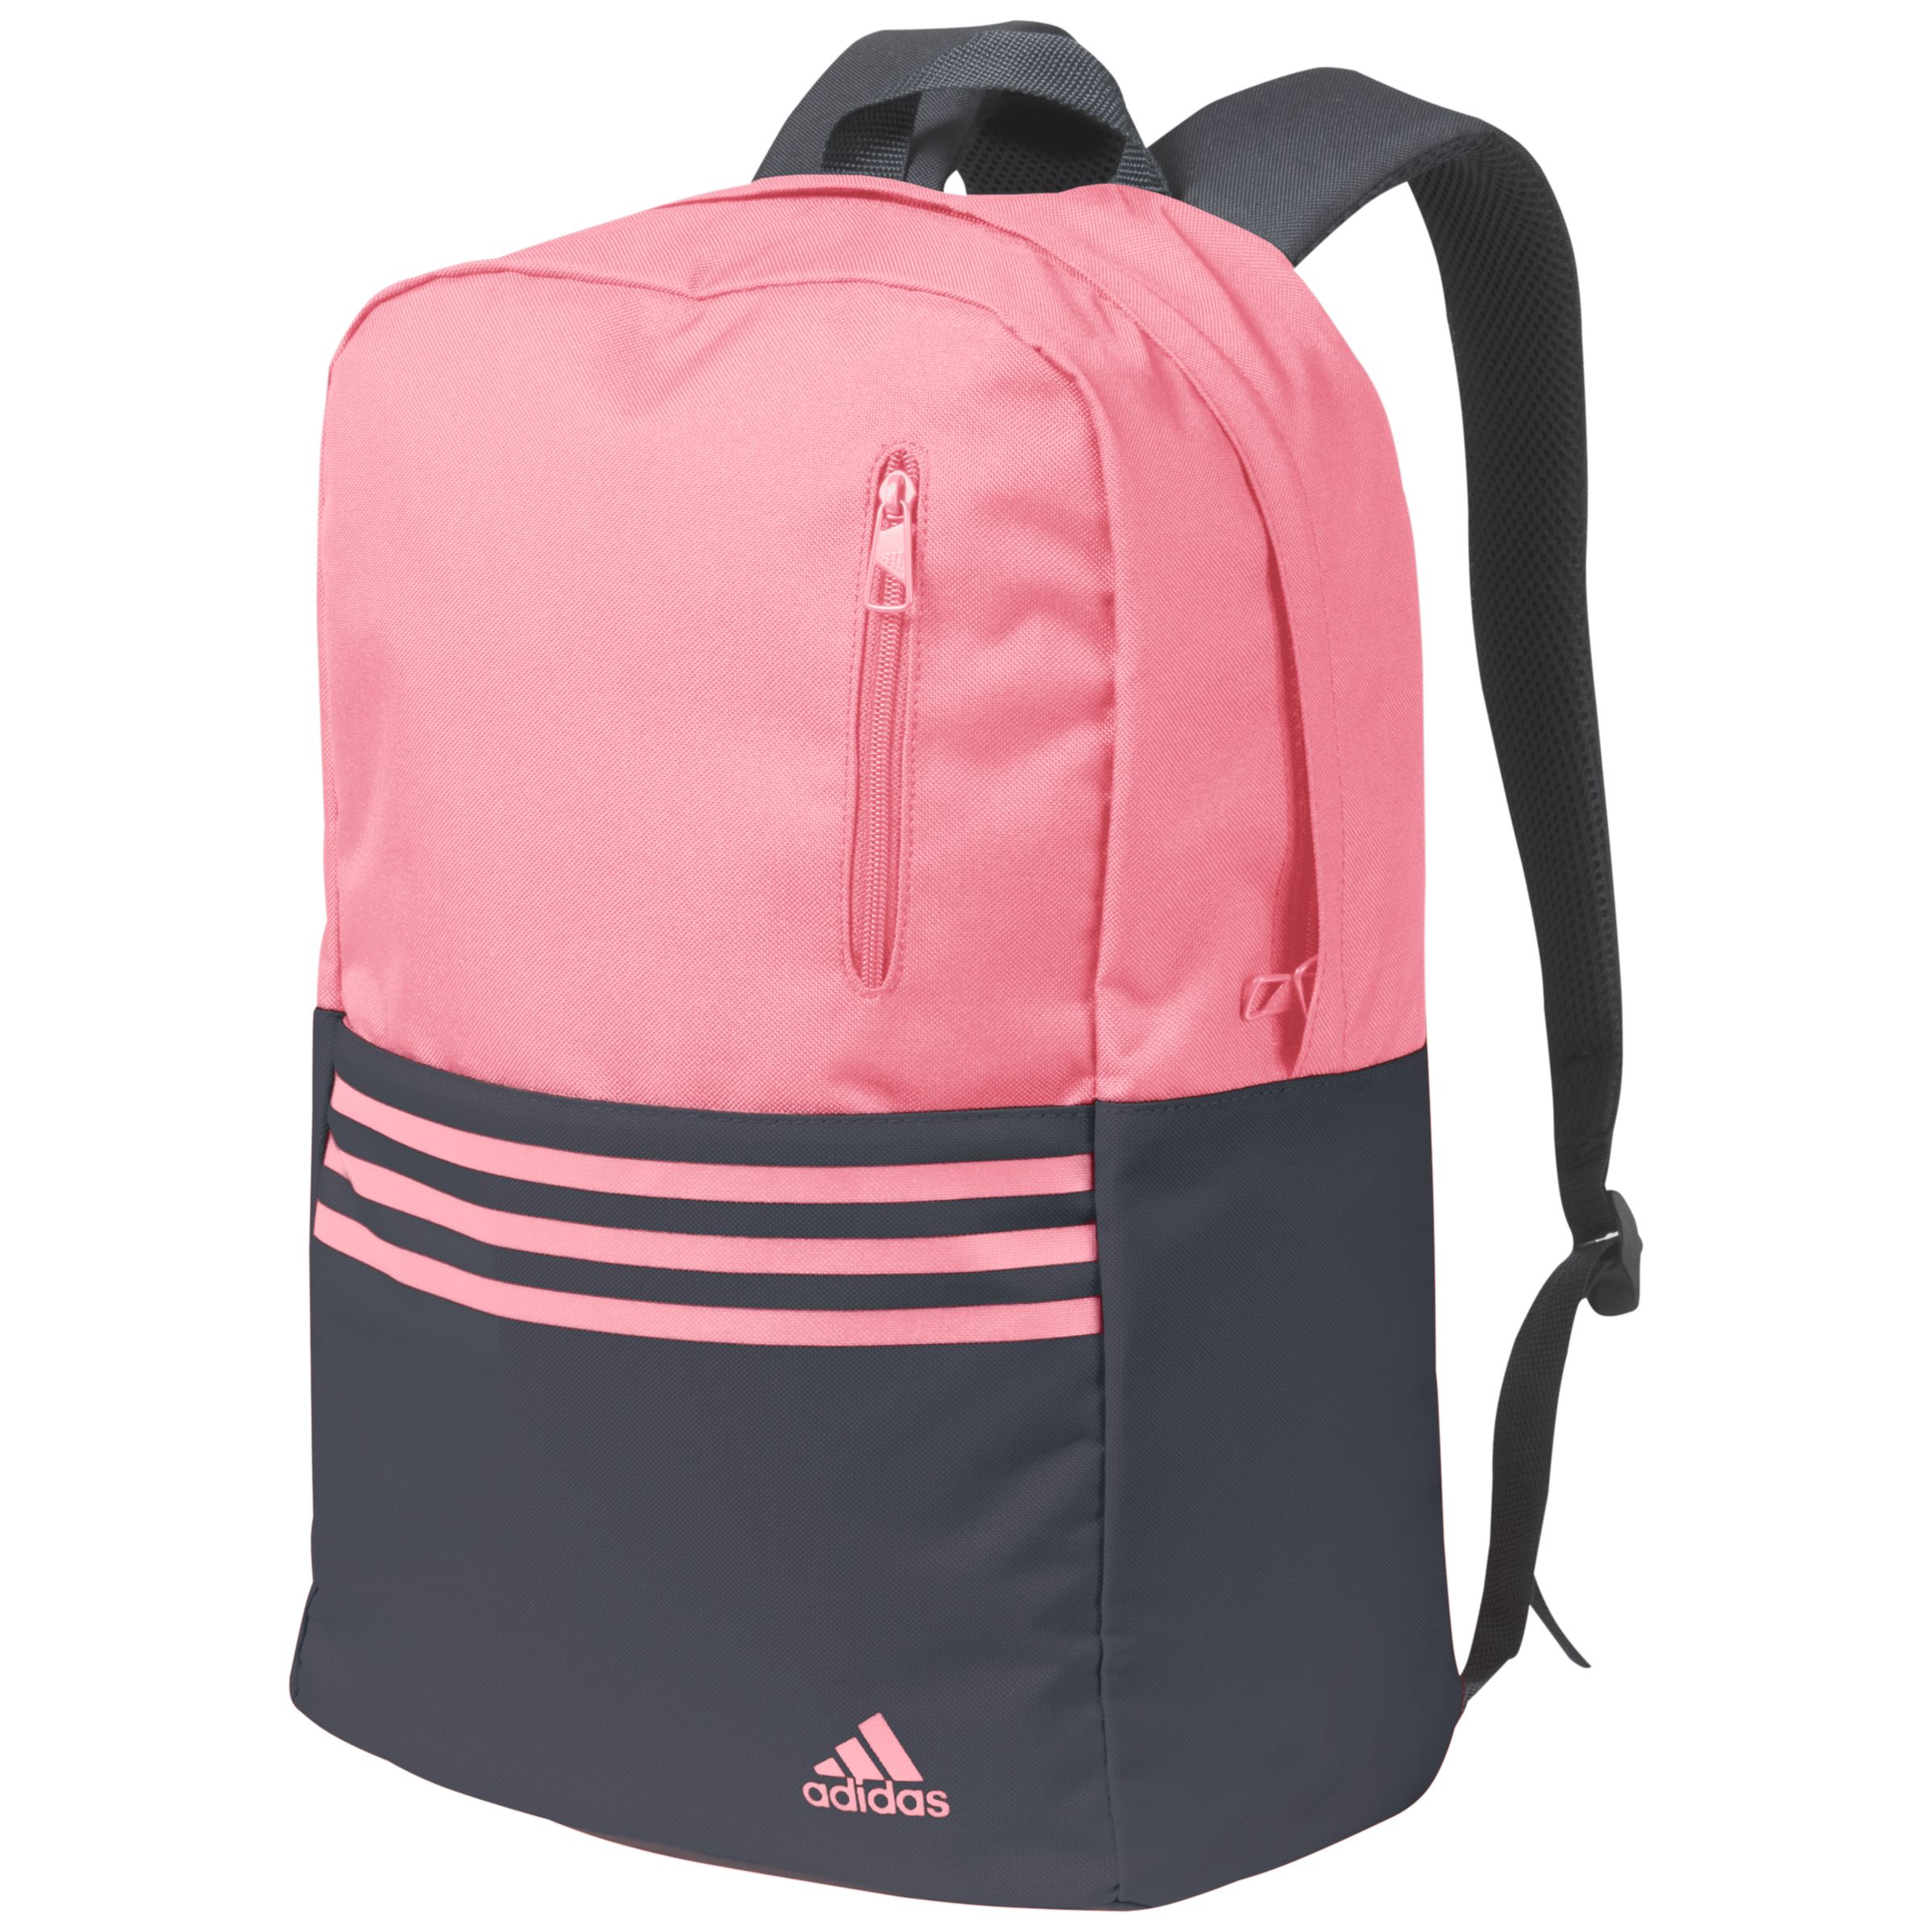 adidas pink and grey backpack